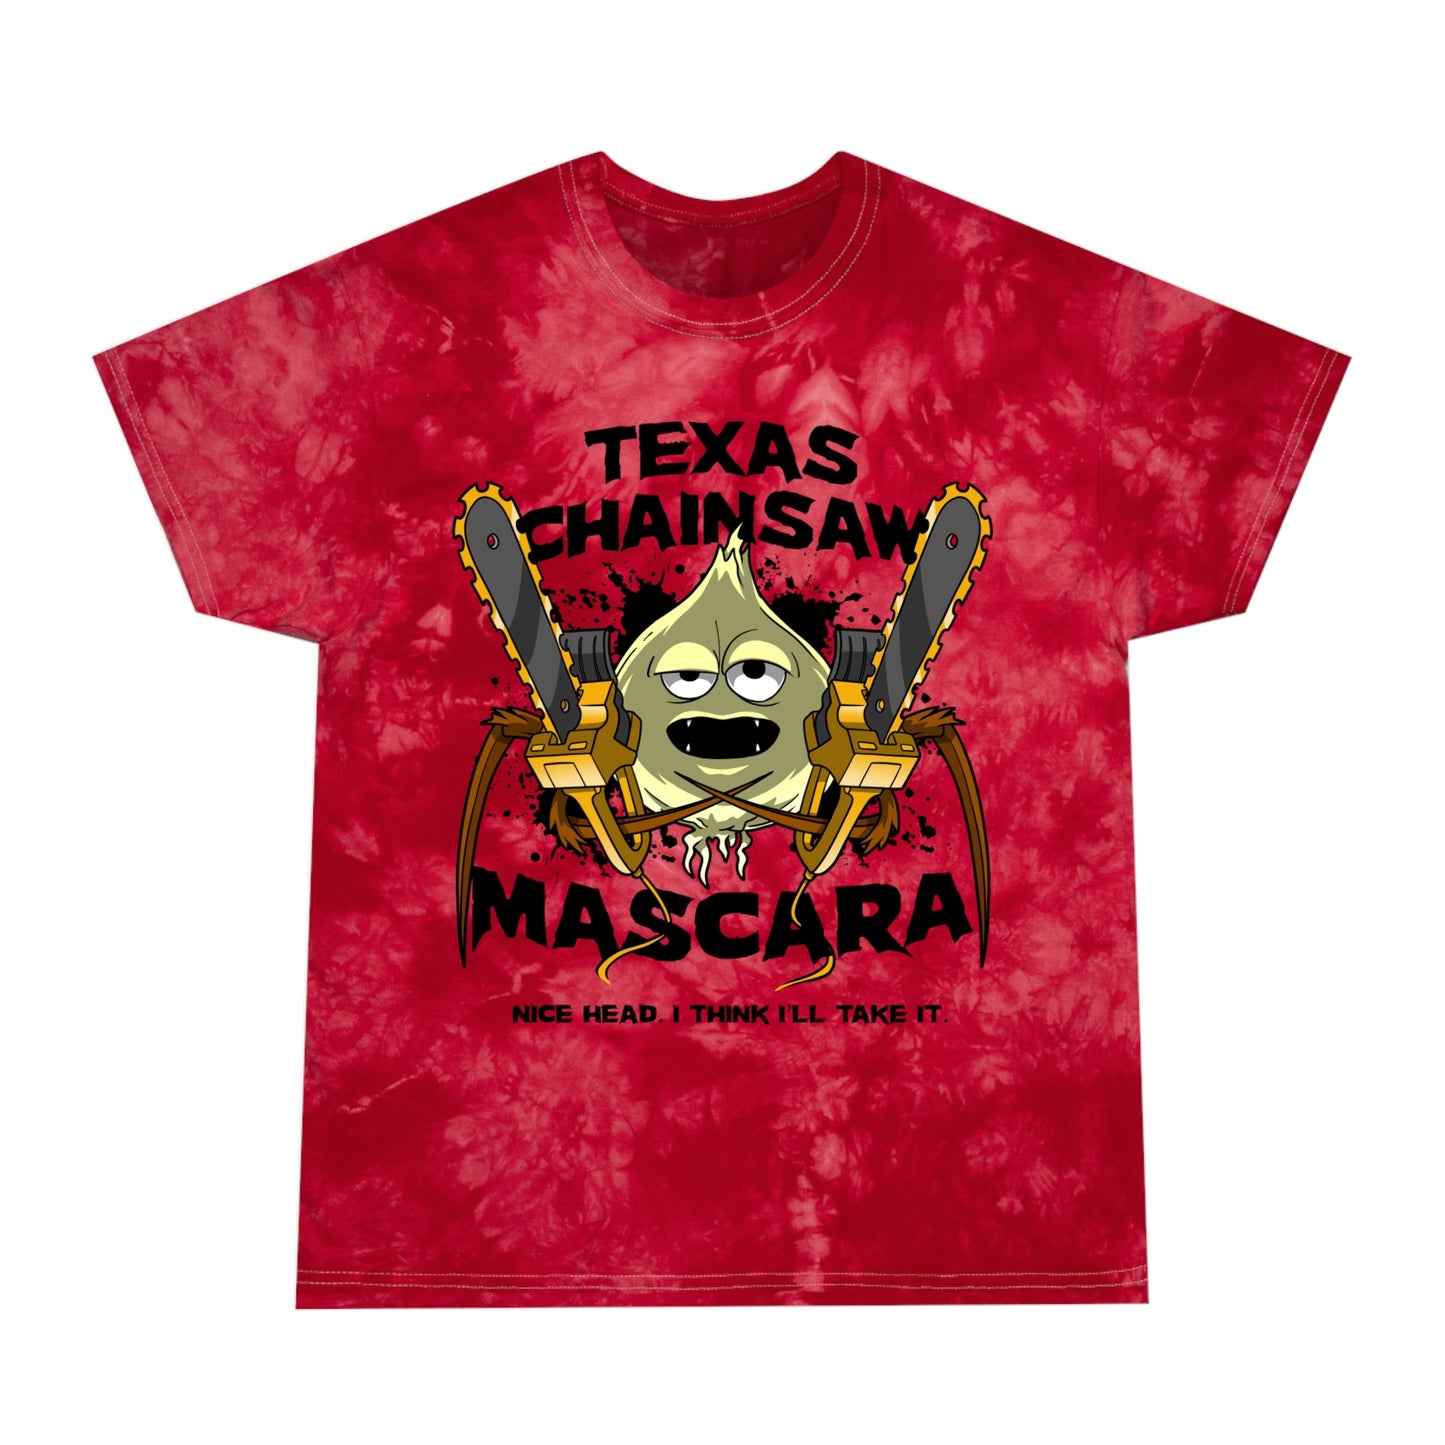 Texas Chainsaw Mascara tie-dye t-shirt